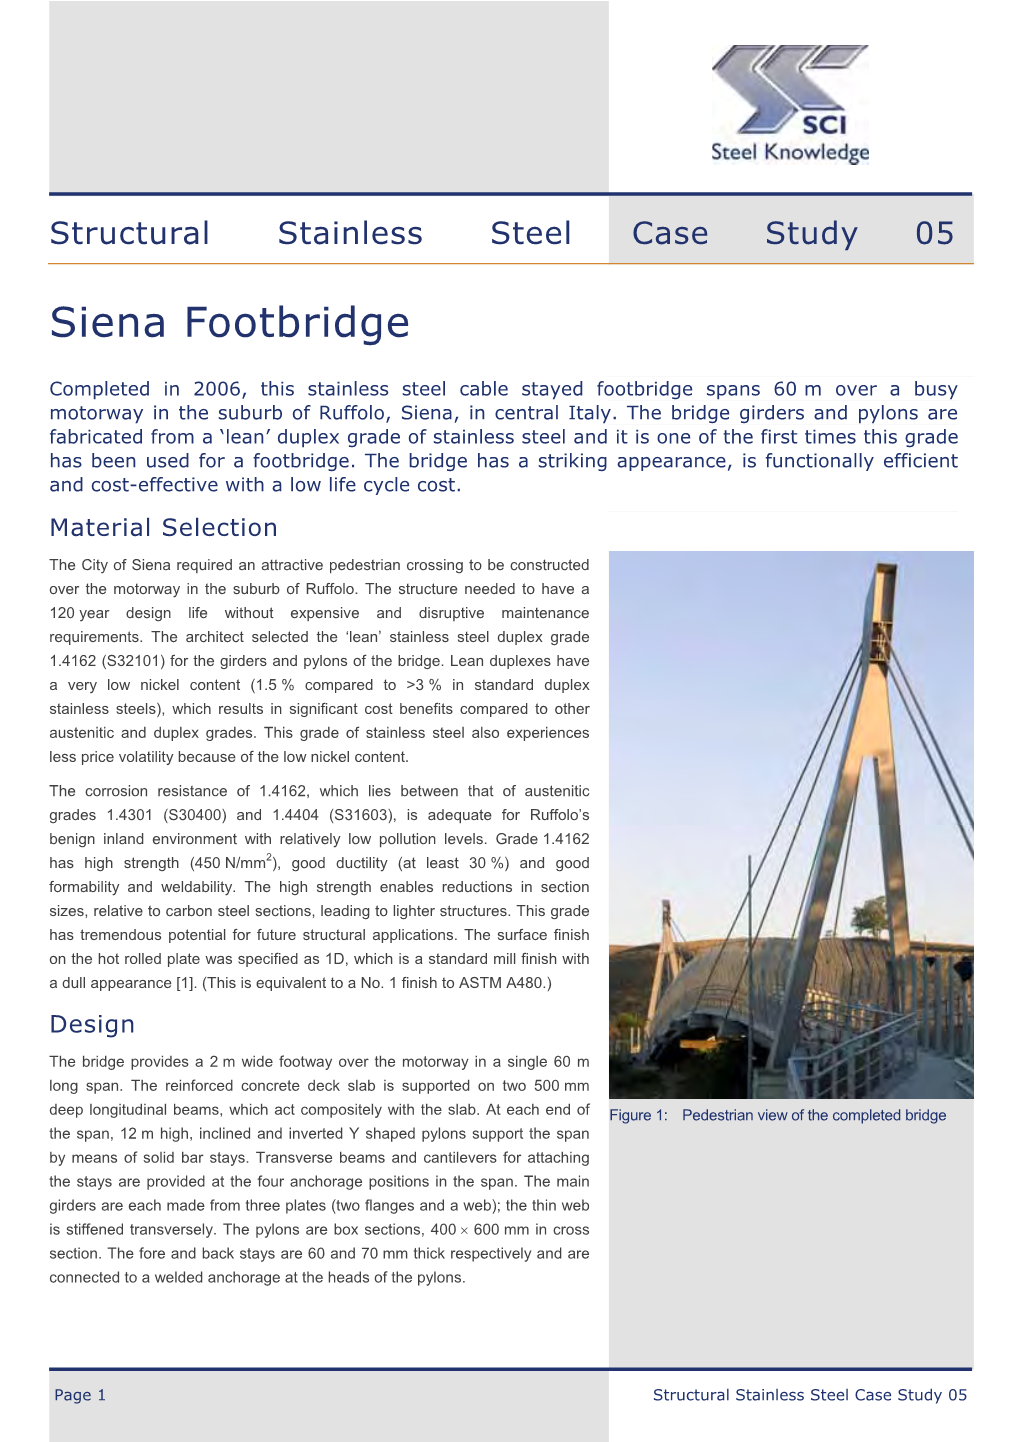 Siena Footbridge